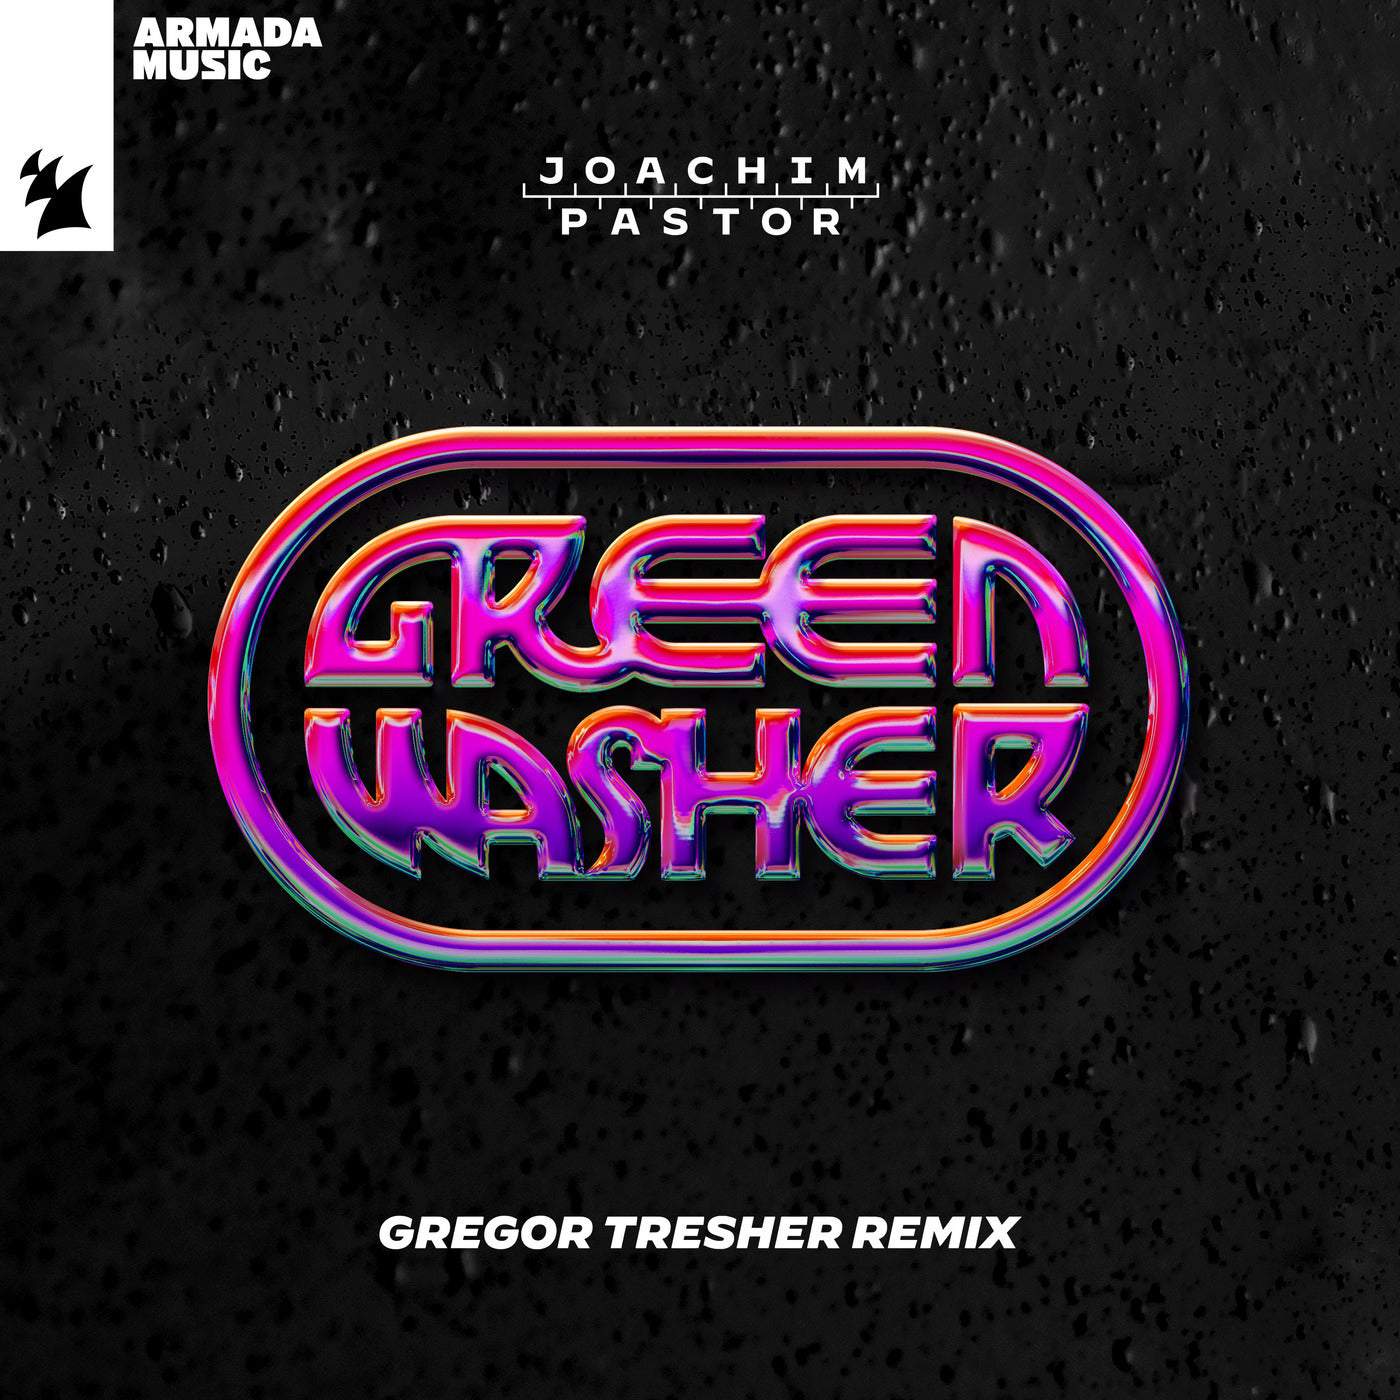 Download Joachim Pastor - Green Washer - Gregor Tresher Remix on Electrobuzz